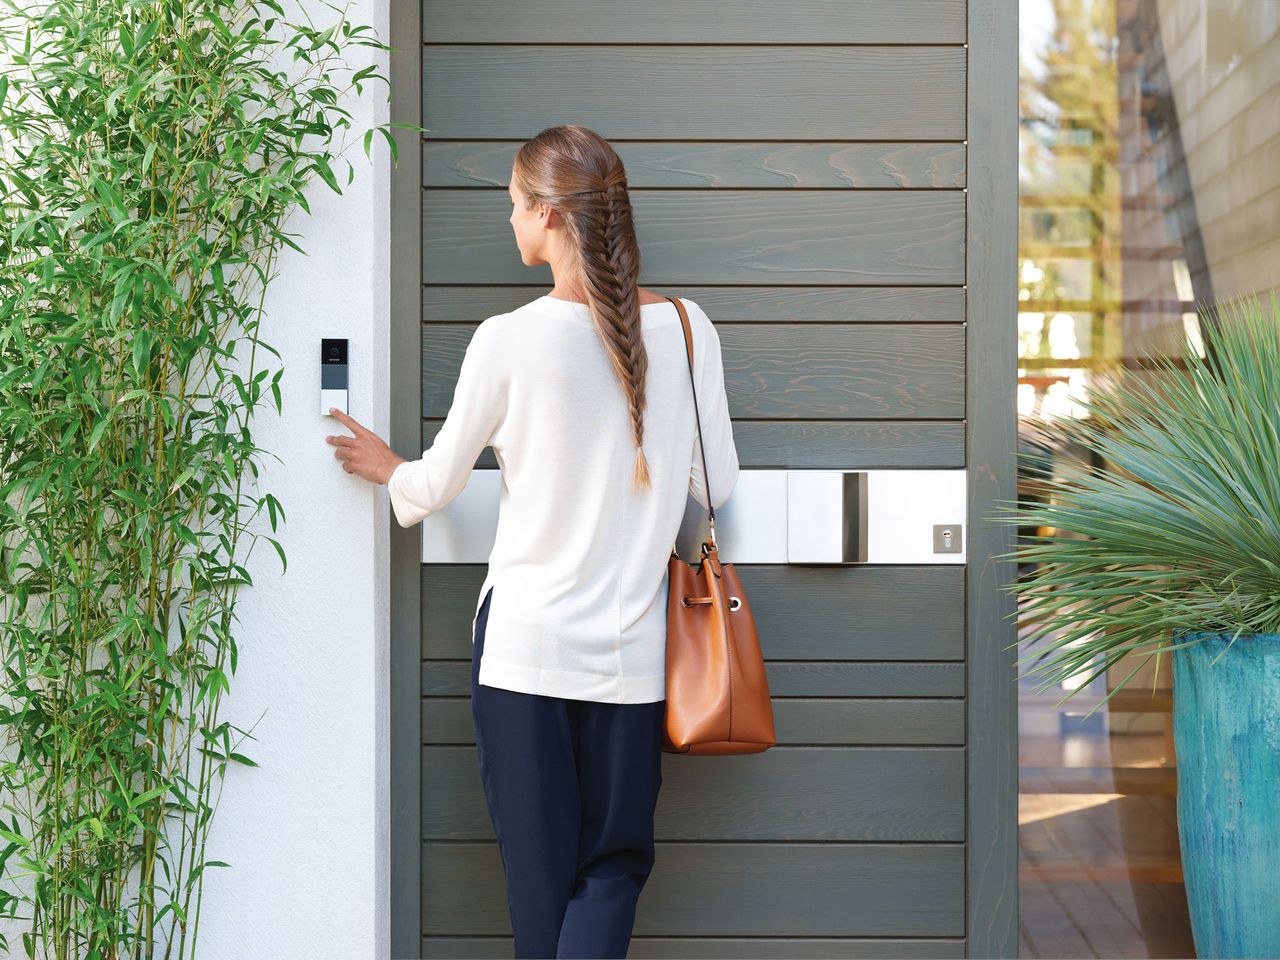 Netatmo Smart Video Doorbell - inteligentny dzwonek do drzwi ze wparciem dla HomeKit